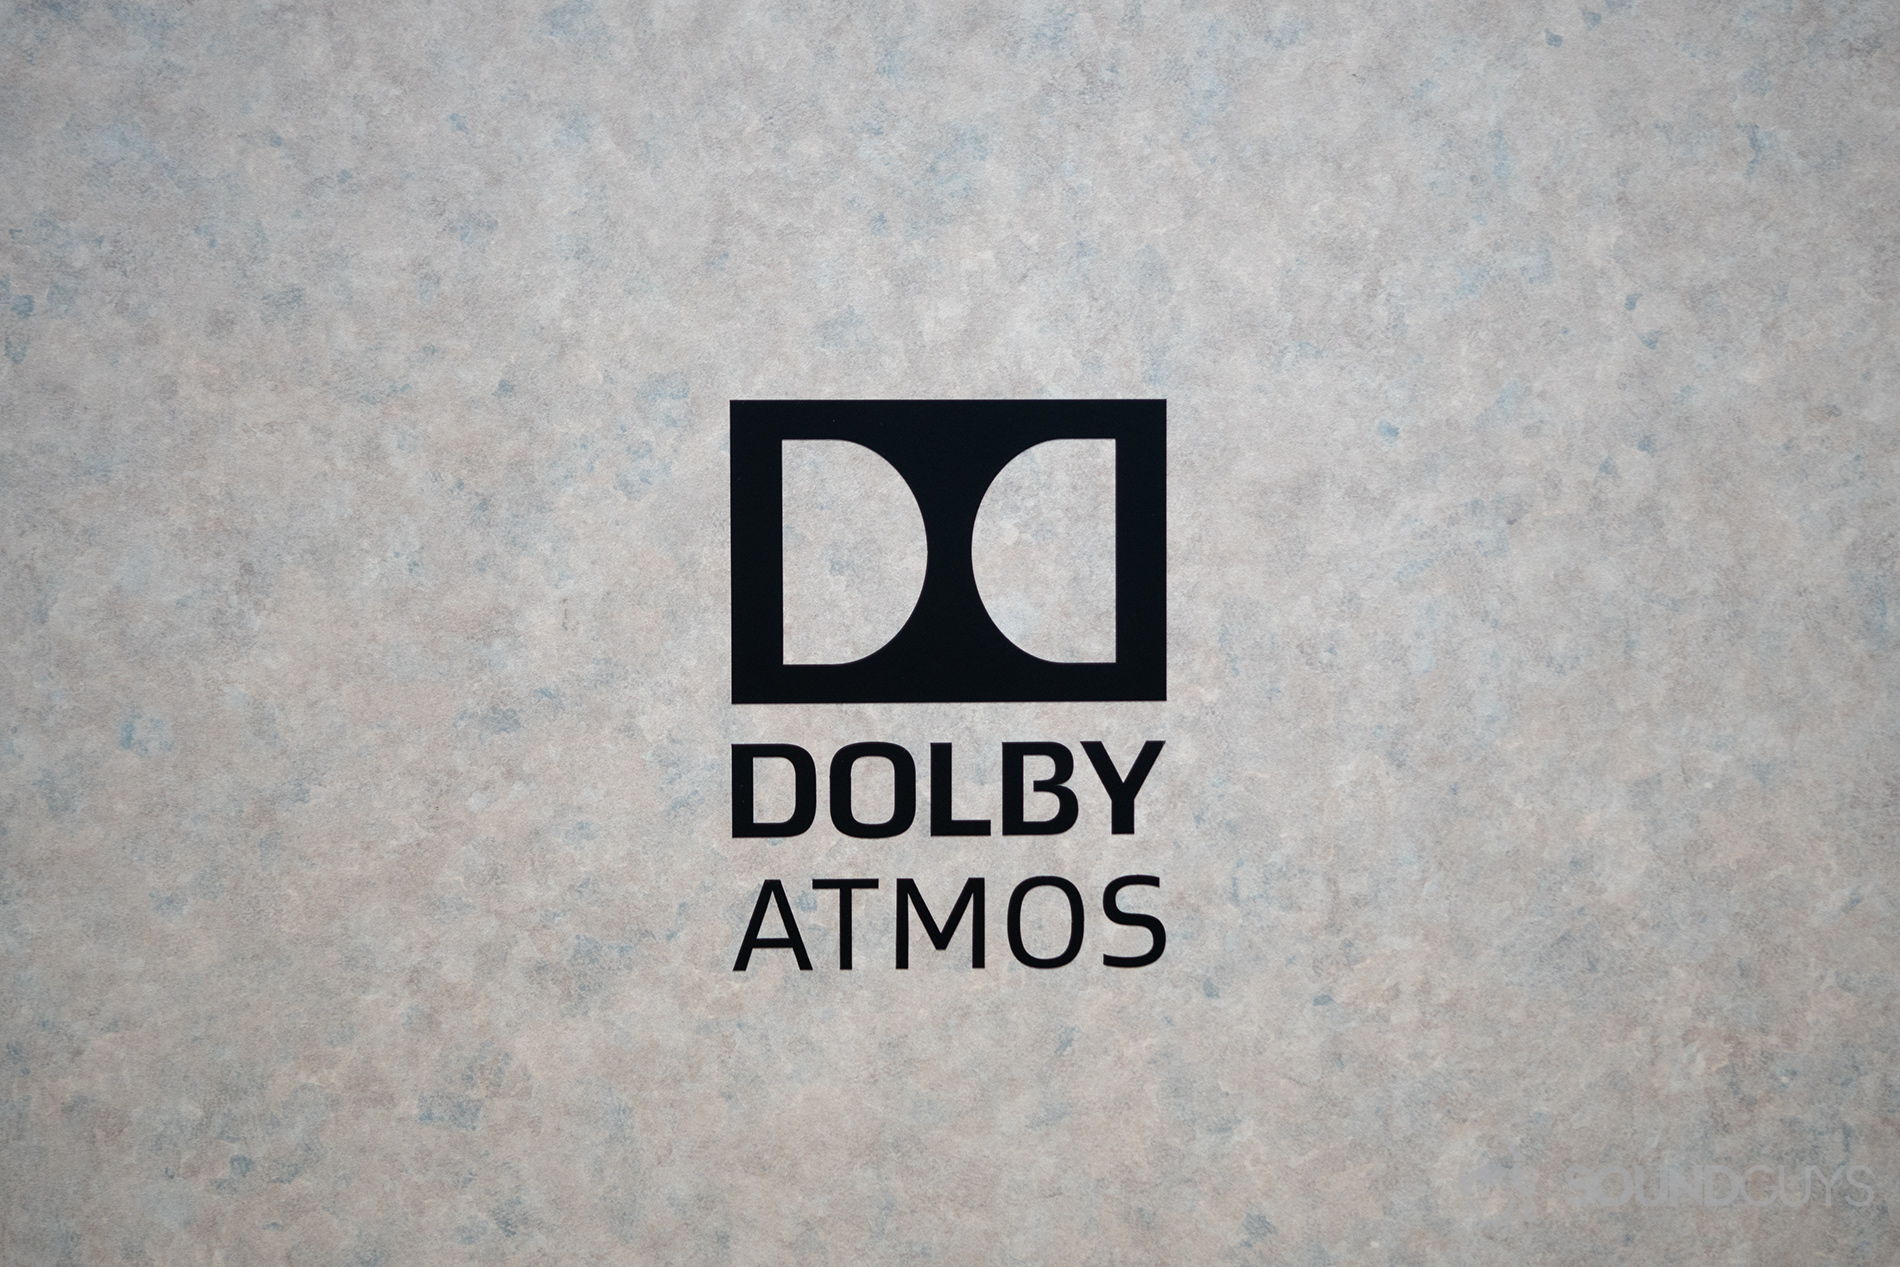 dolby audio test 7.1